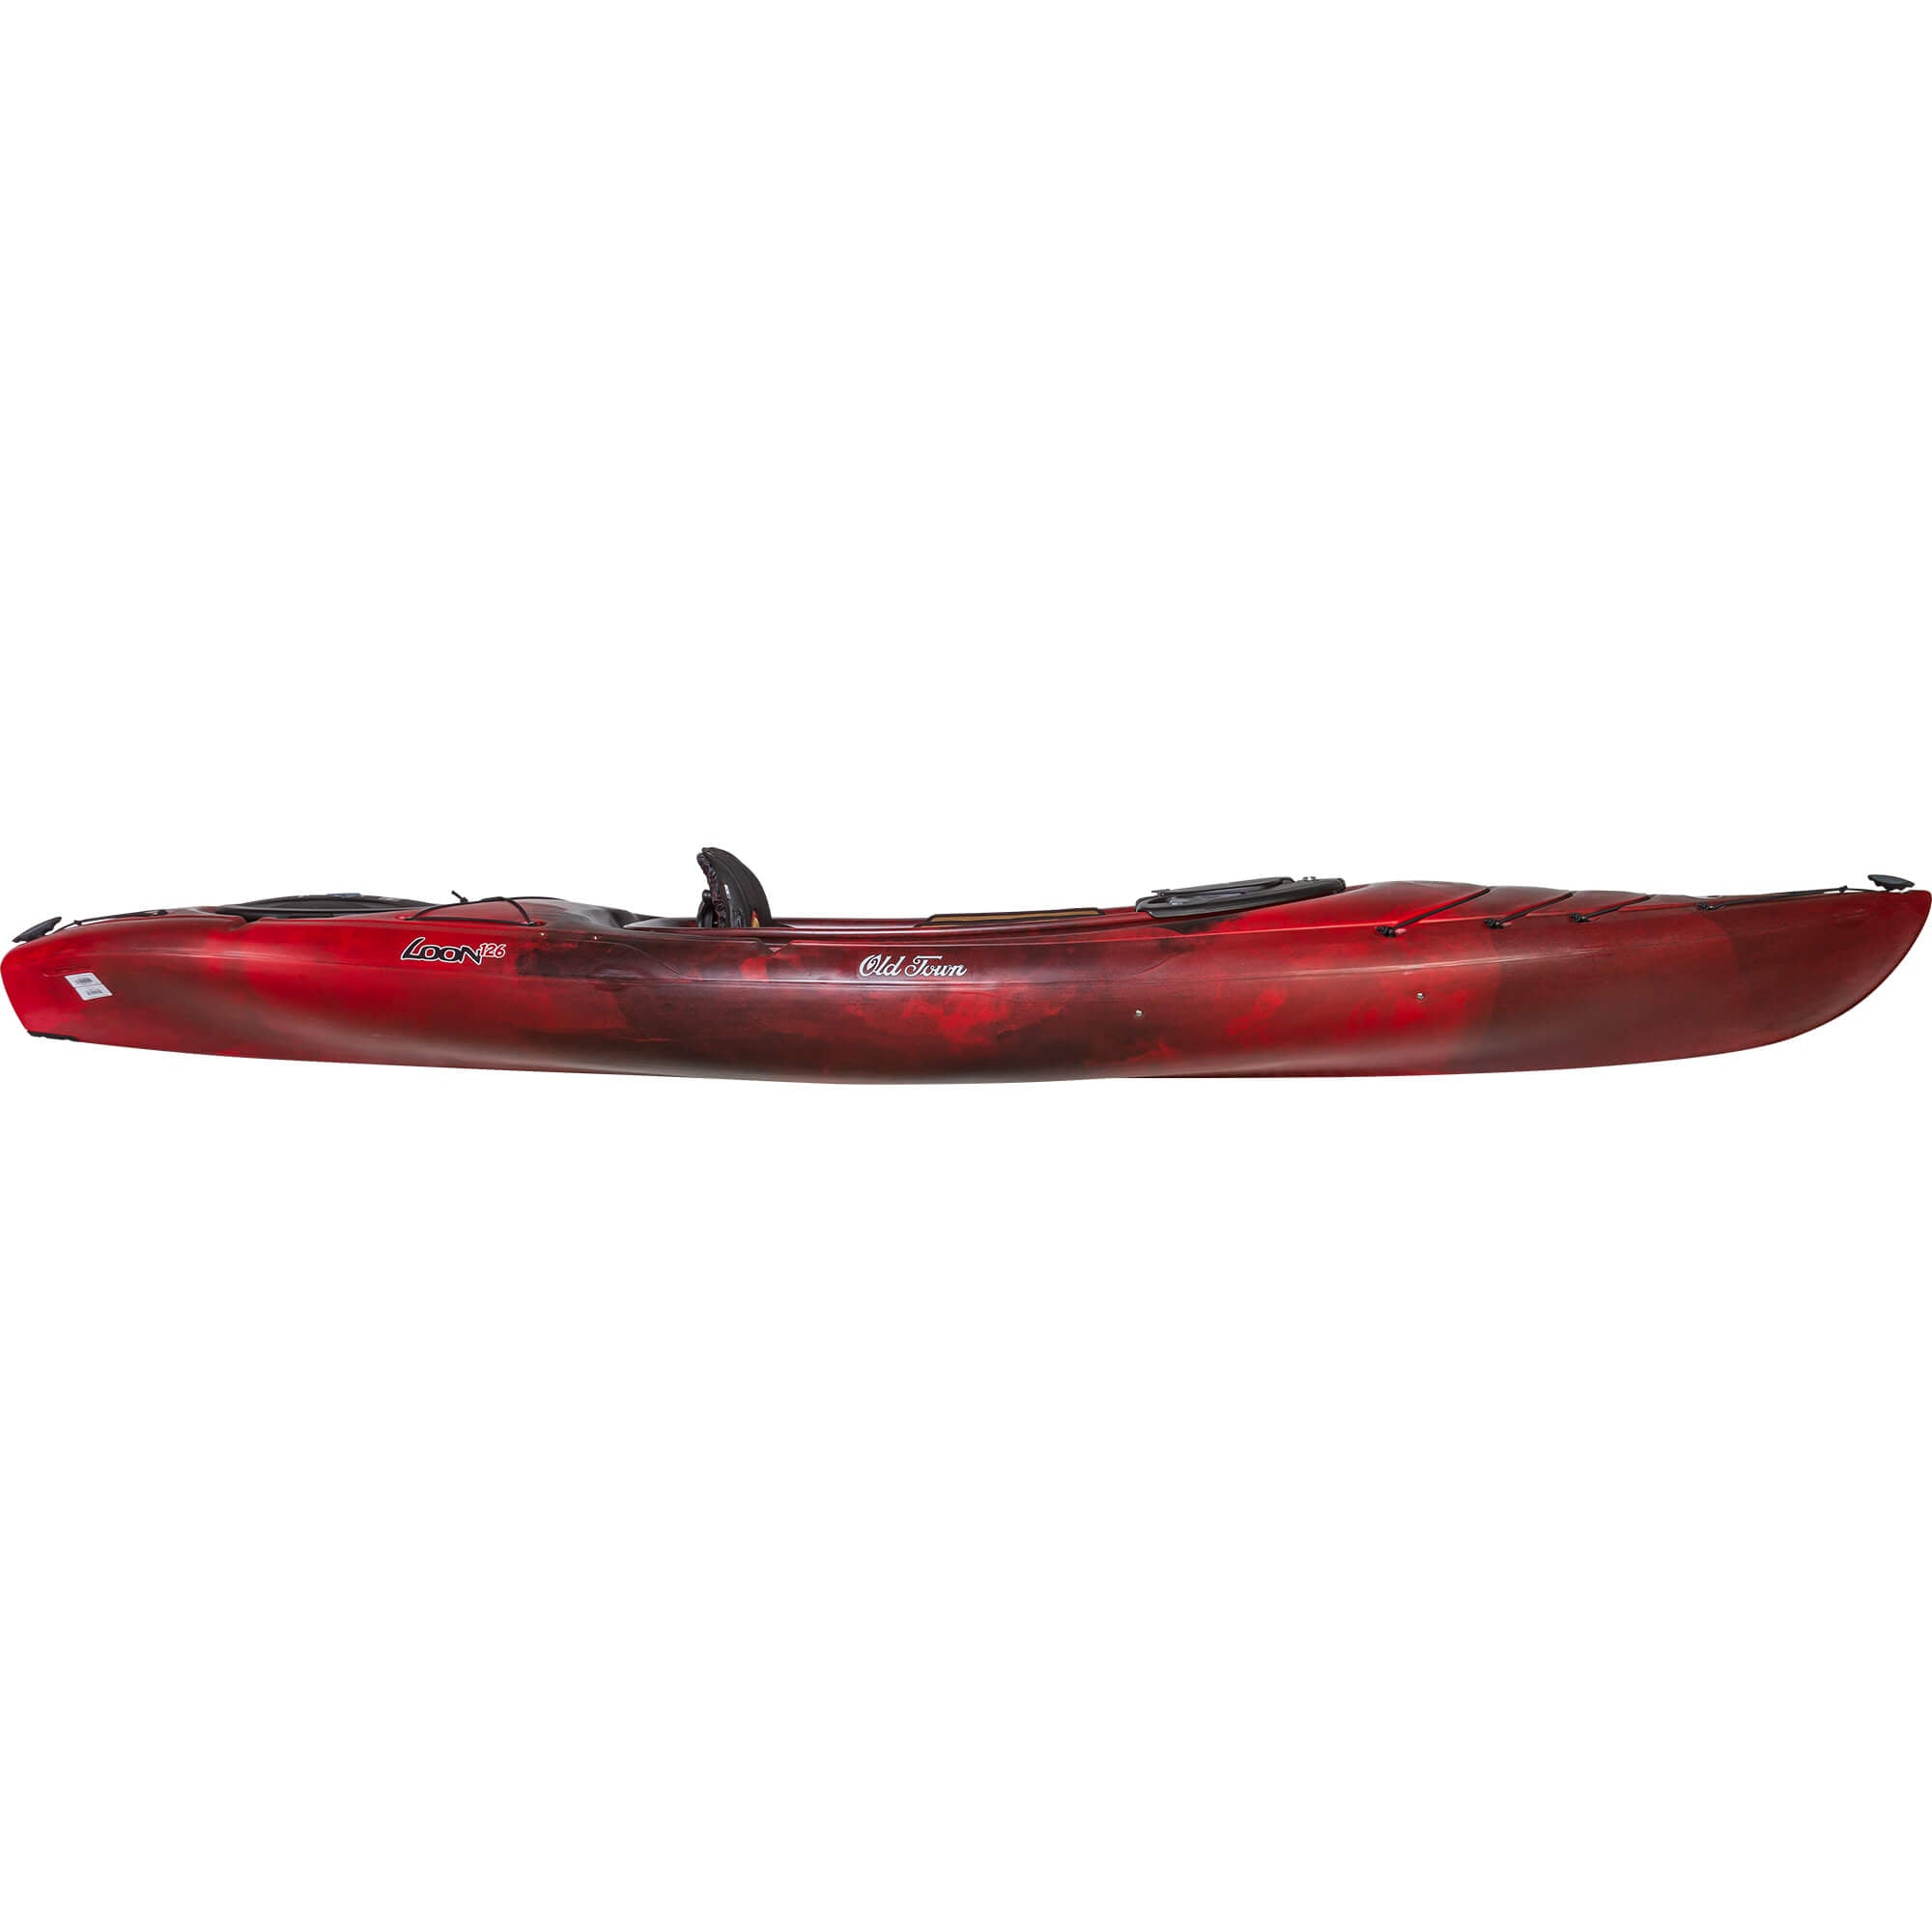 Old Town Loon 126 Premium Recreational Kayak - Gear For Adventure